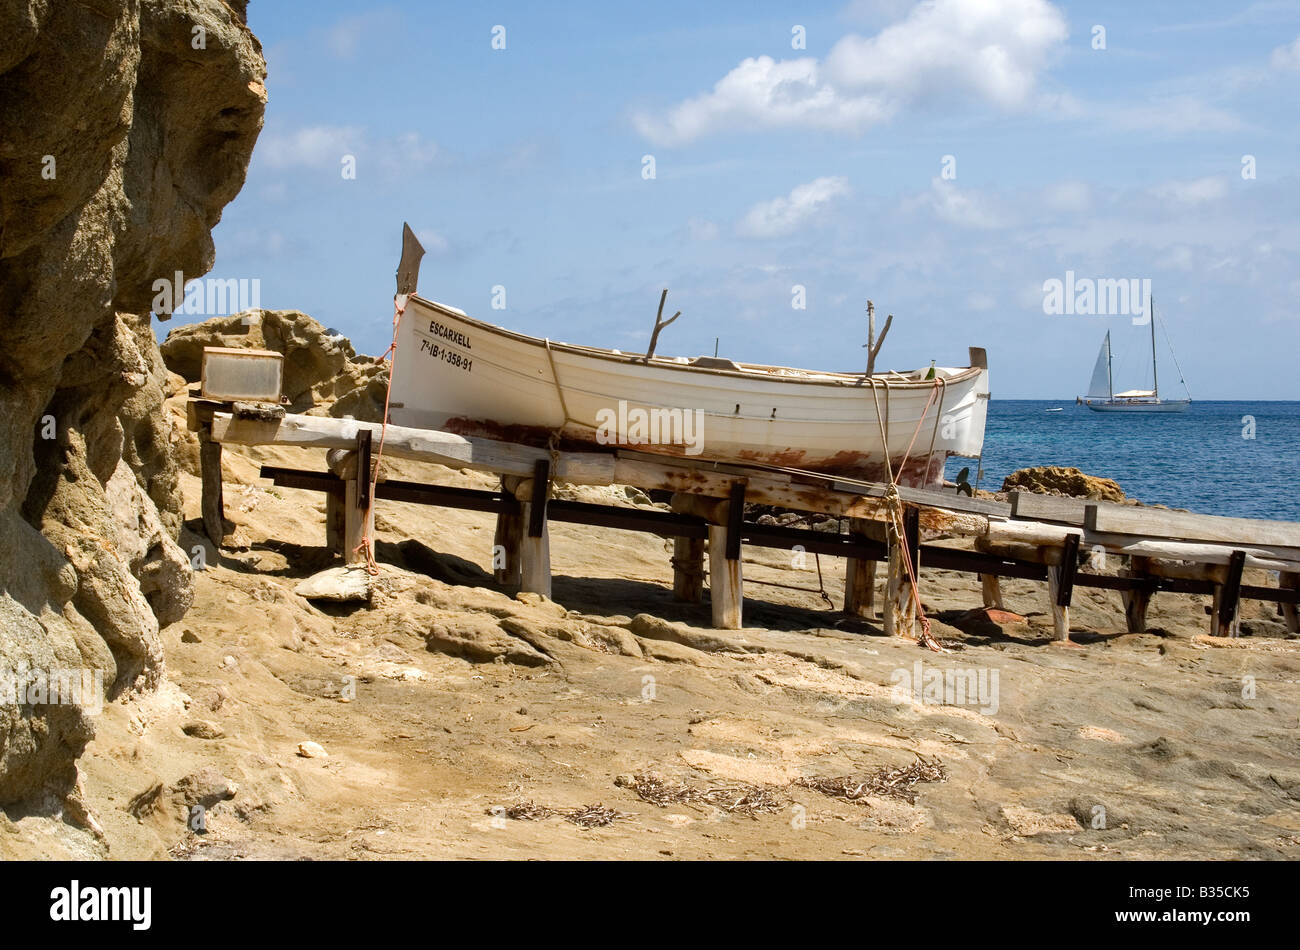 Fishing boat and yacht, Pou des Lleo, Ibiza Stock Photo